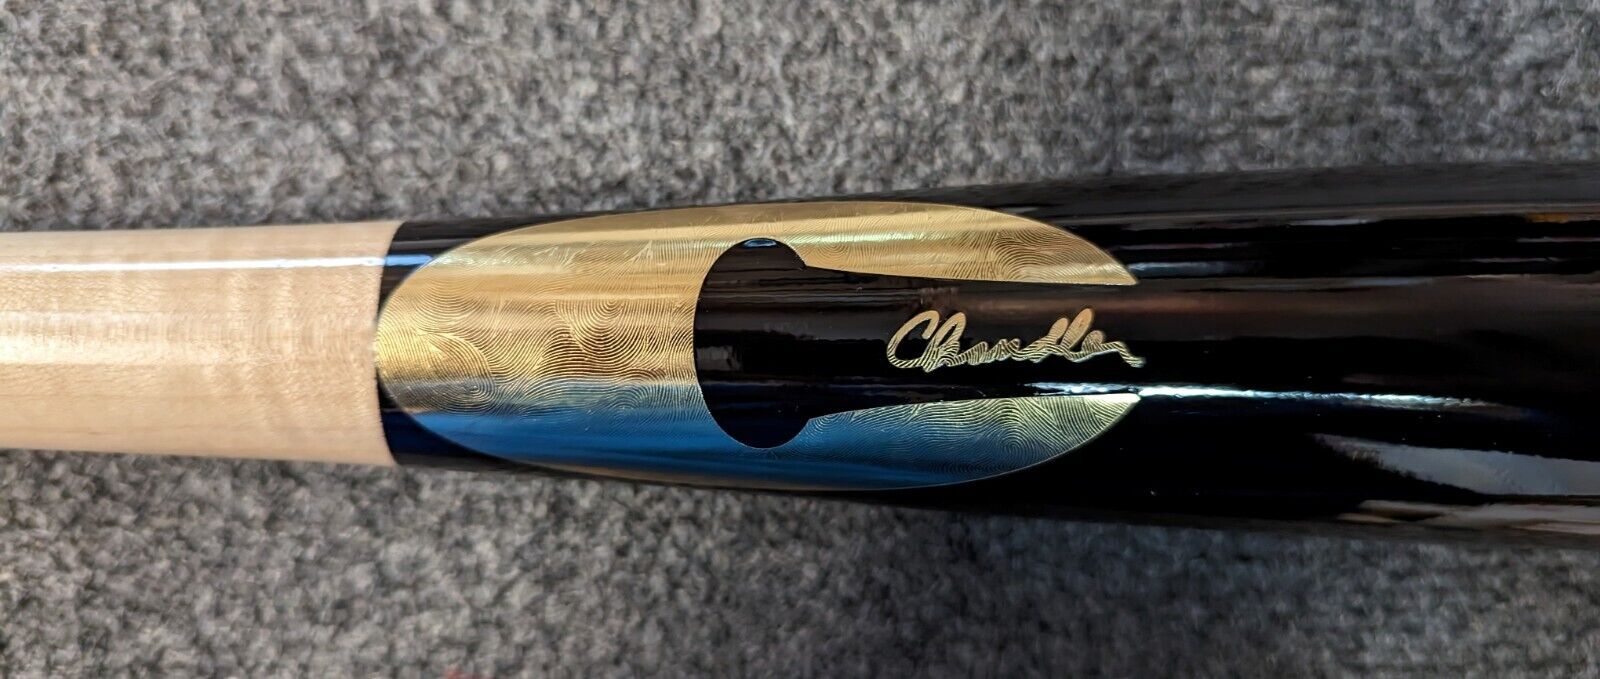 Steven Kwan Cleveland Guardians Signed Autographed Blue #38 Custom